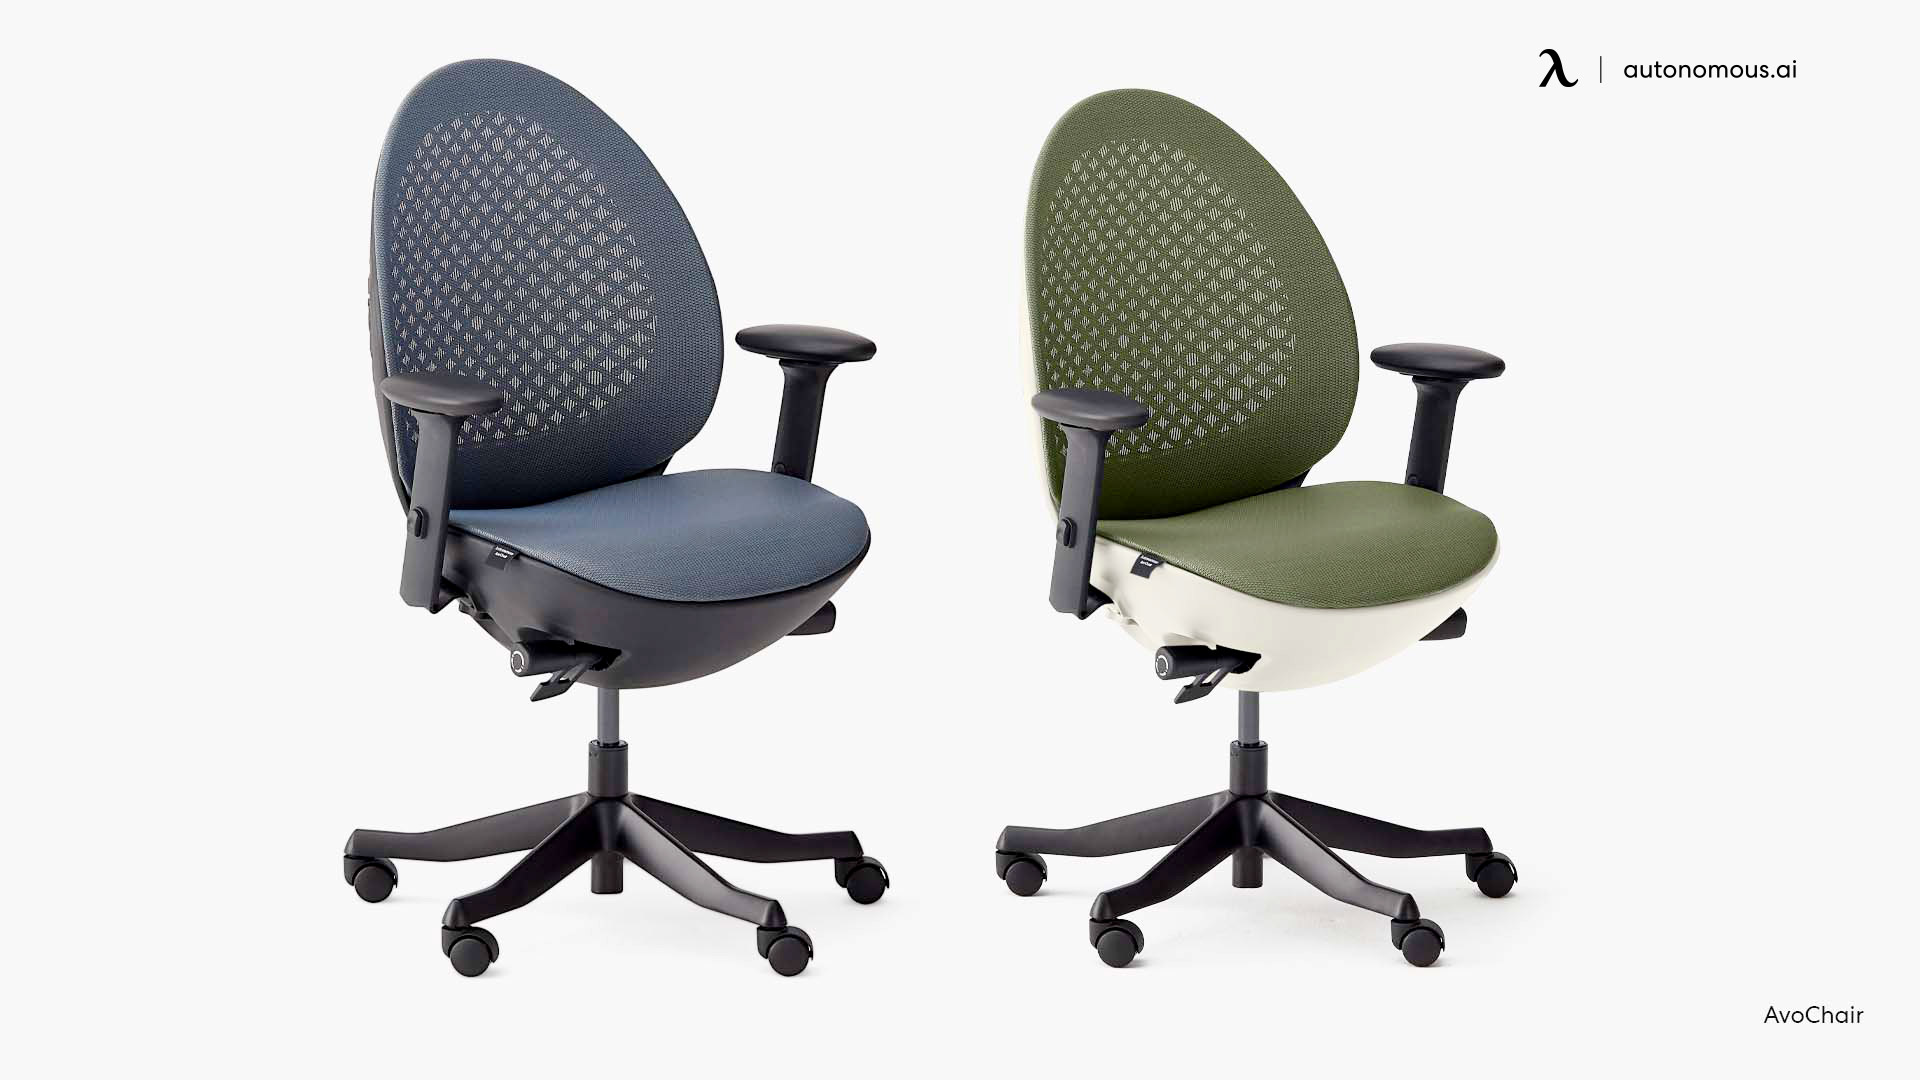 AvoChair colorful office chair